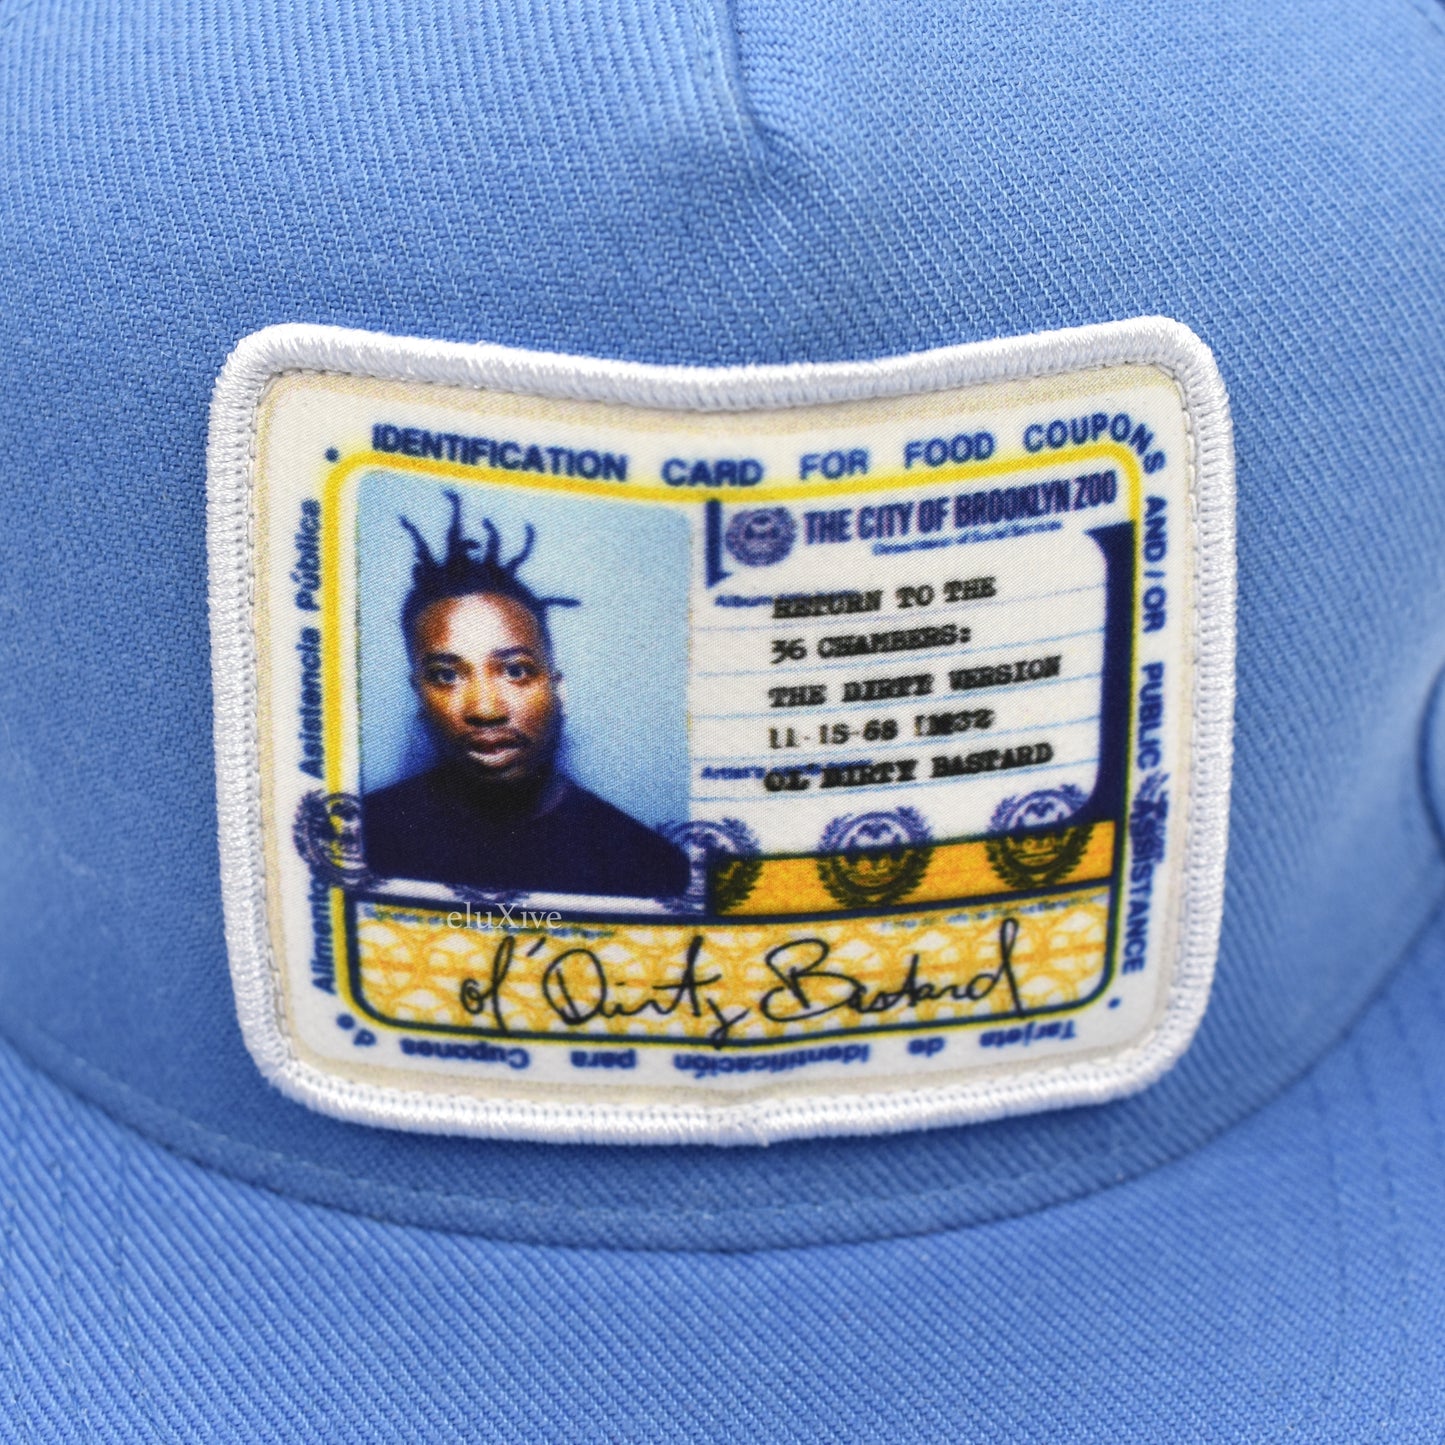 Supreme - Ol Dirty Bastard Logo Patch Hat (Blue)